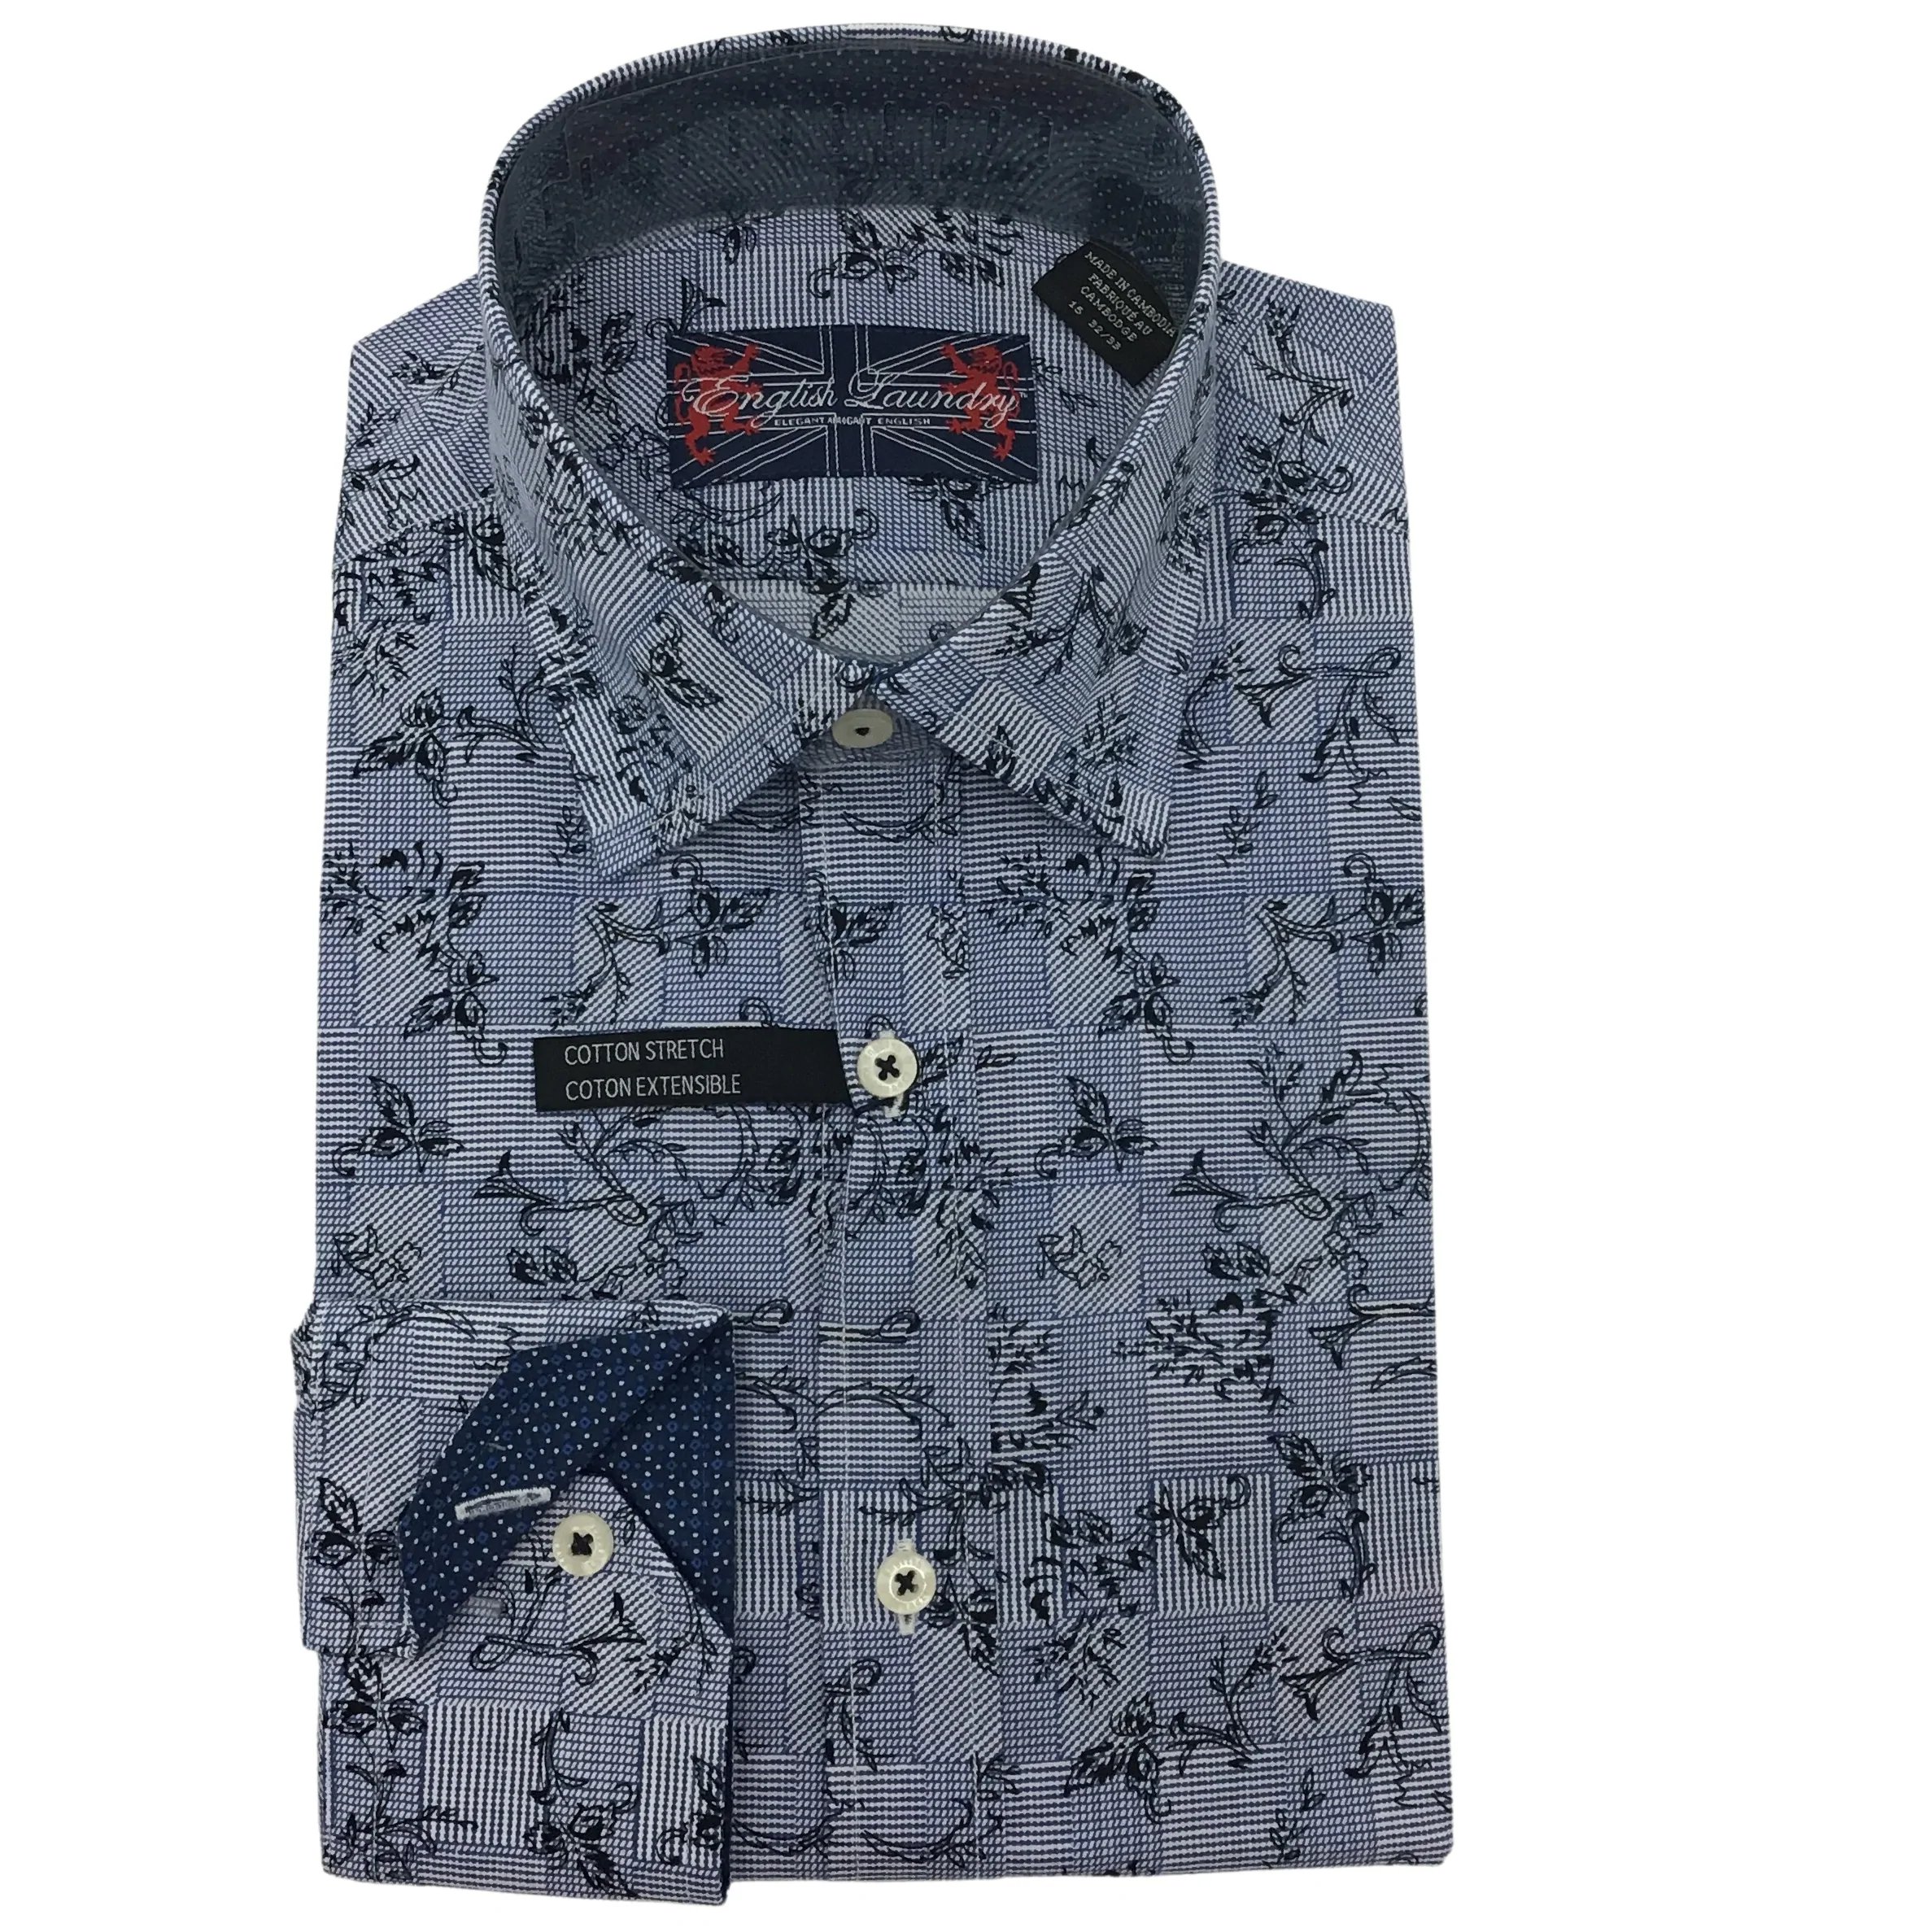 English laundry: Men's Dress Shirt / Button up / Blue / Pattern / Various Sizes